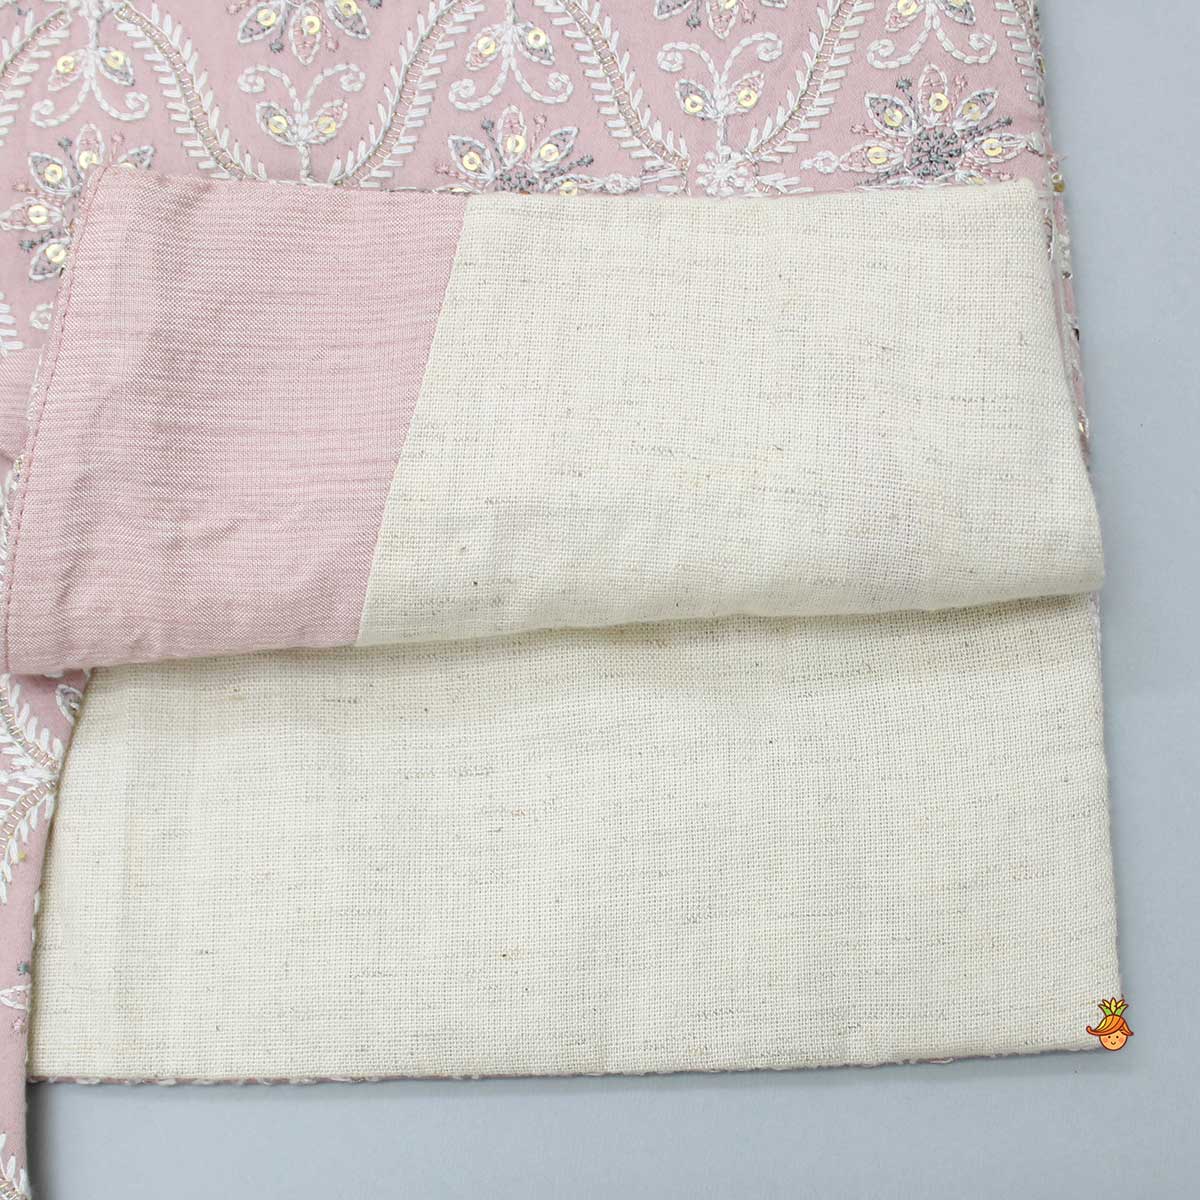 Elegant Front Open Embroidered Asymmetric Pink Sherwani And Pyjama